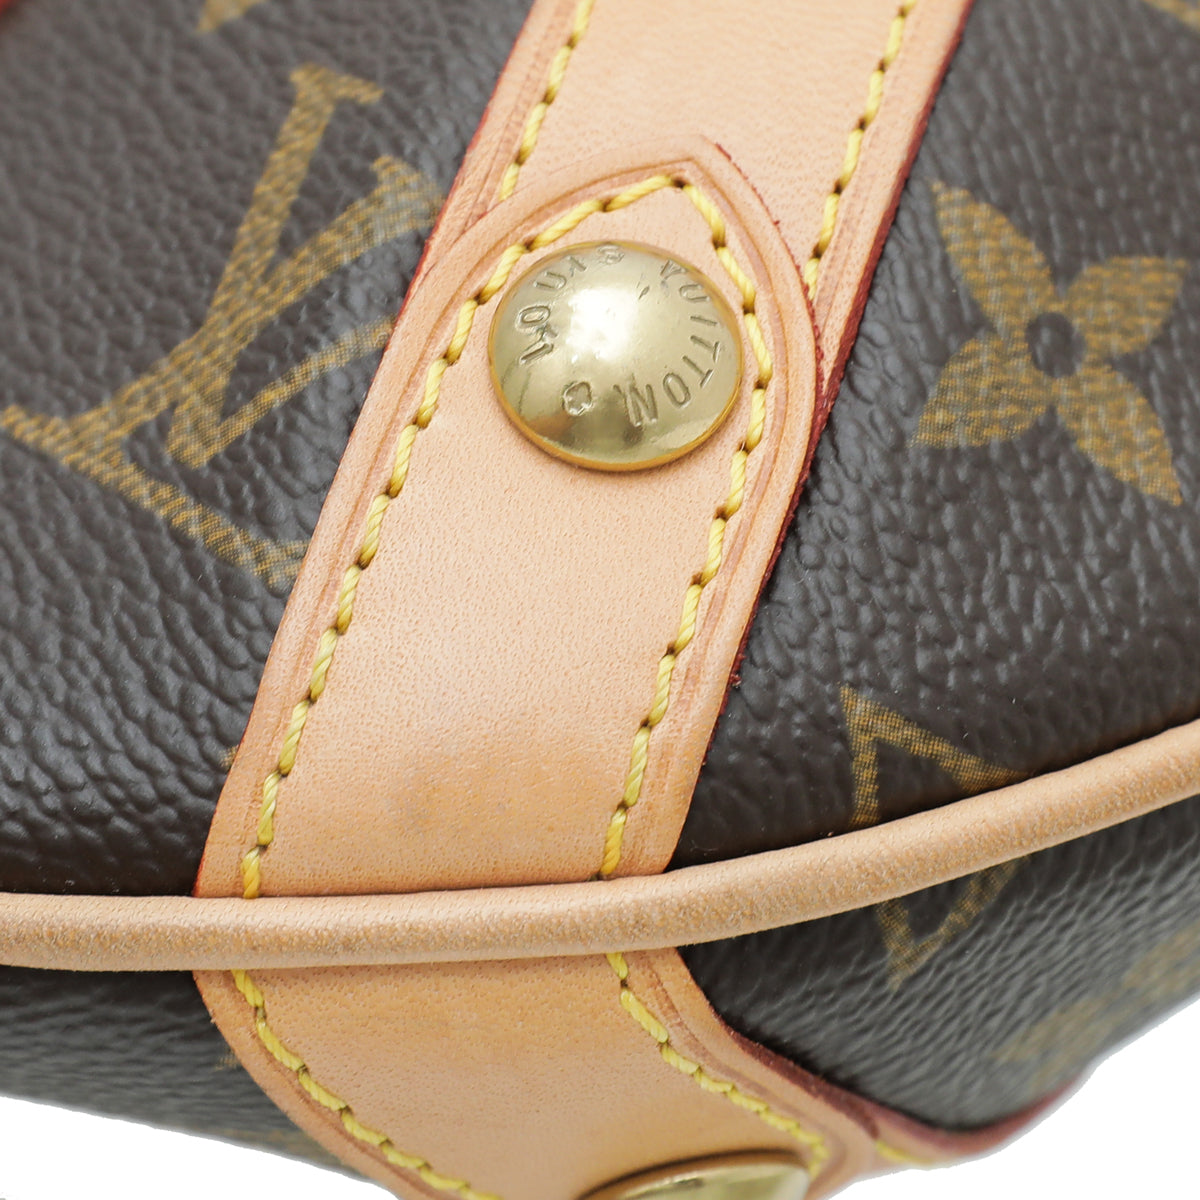 Louis Vuitton Leonor Small Shoulder Bag in Monogram - SOLD